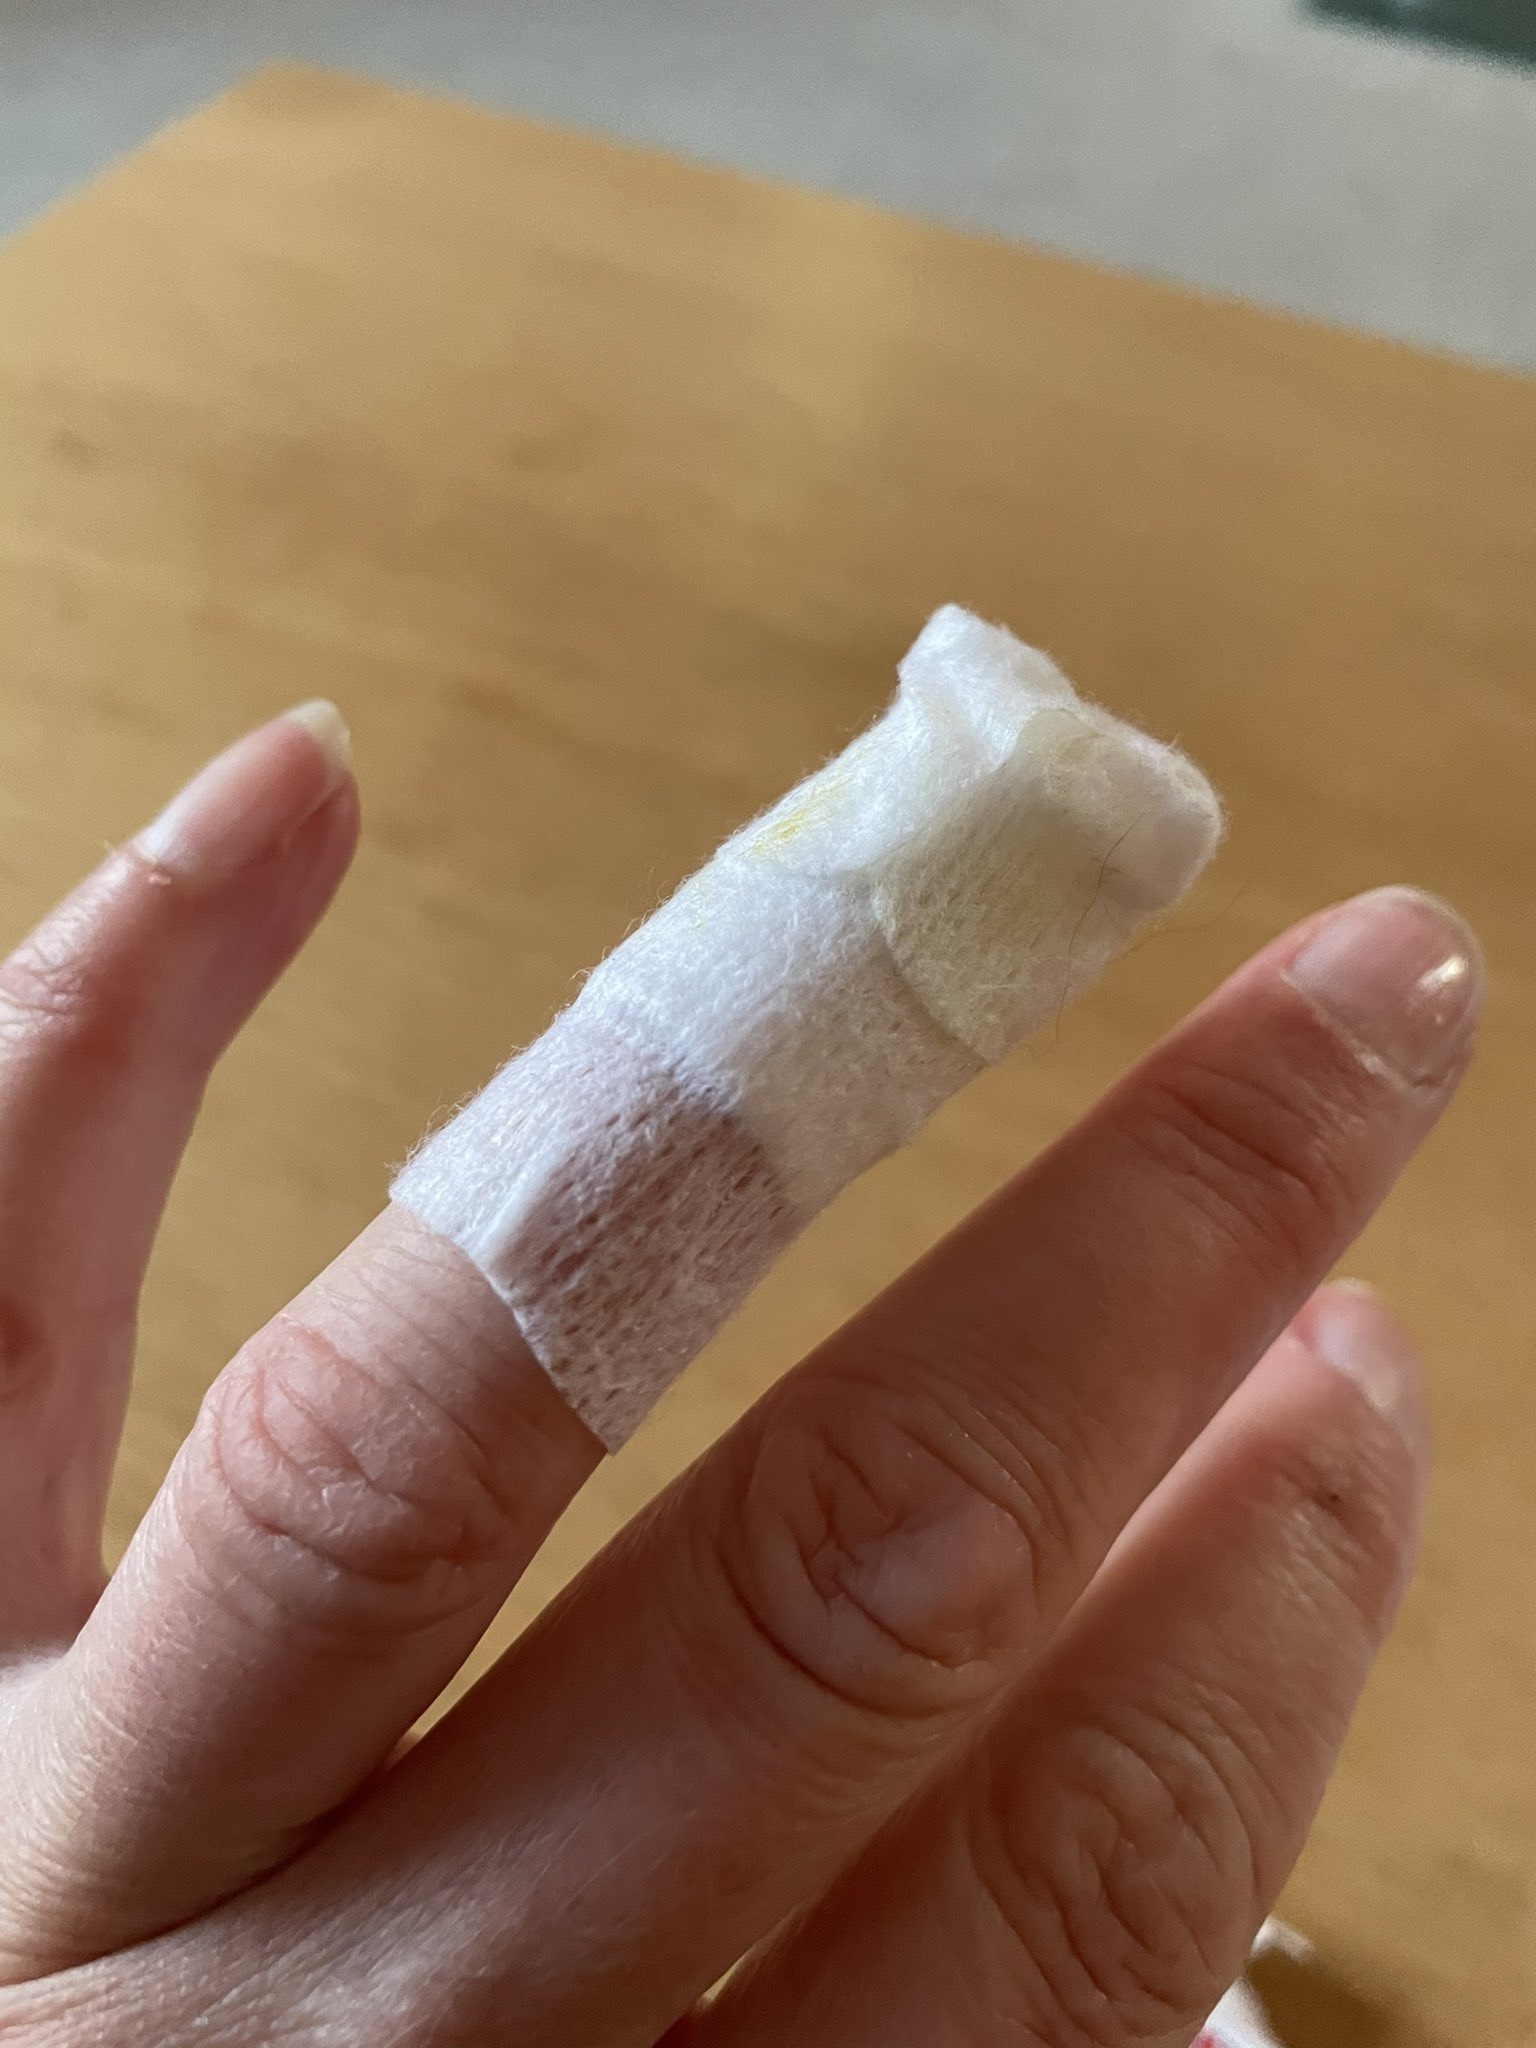 Alison Hernandez\s bandaged finger (Image: Alison Hernandez/Twitter - free for use by LDRS partners)